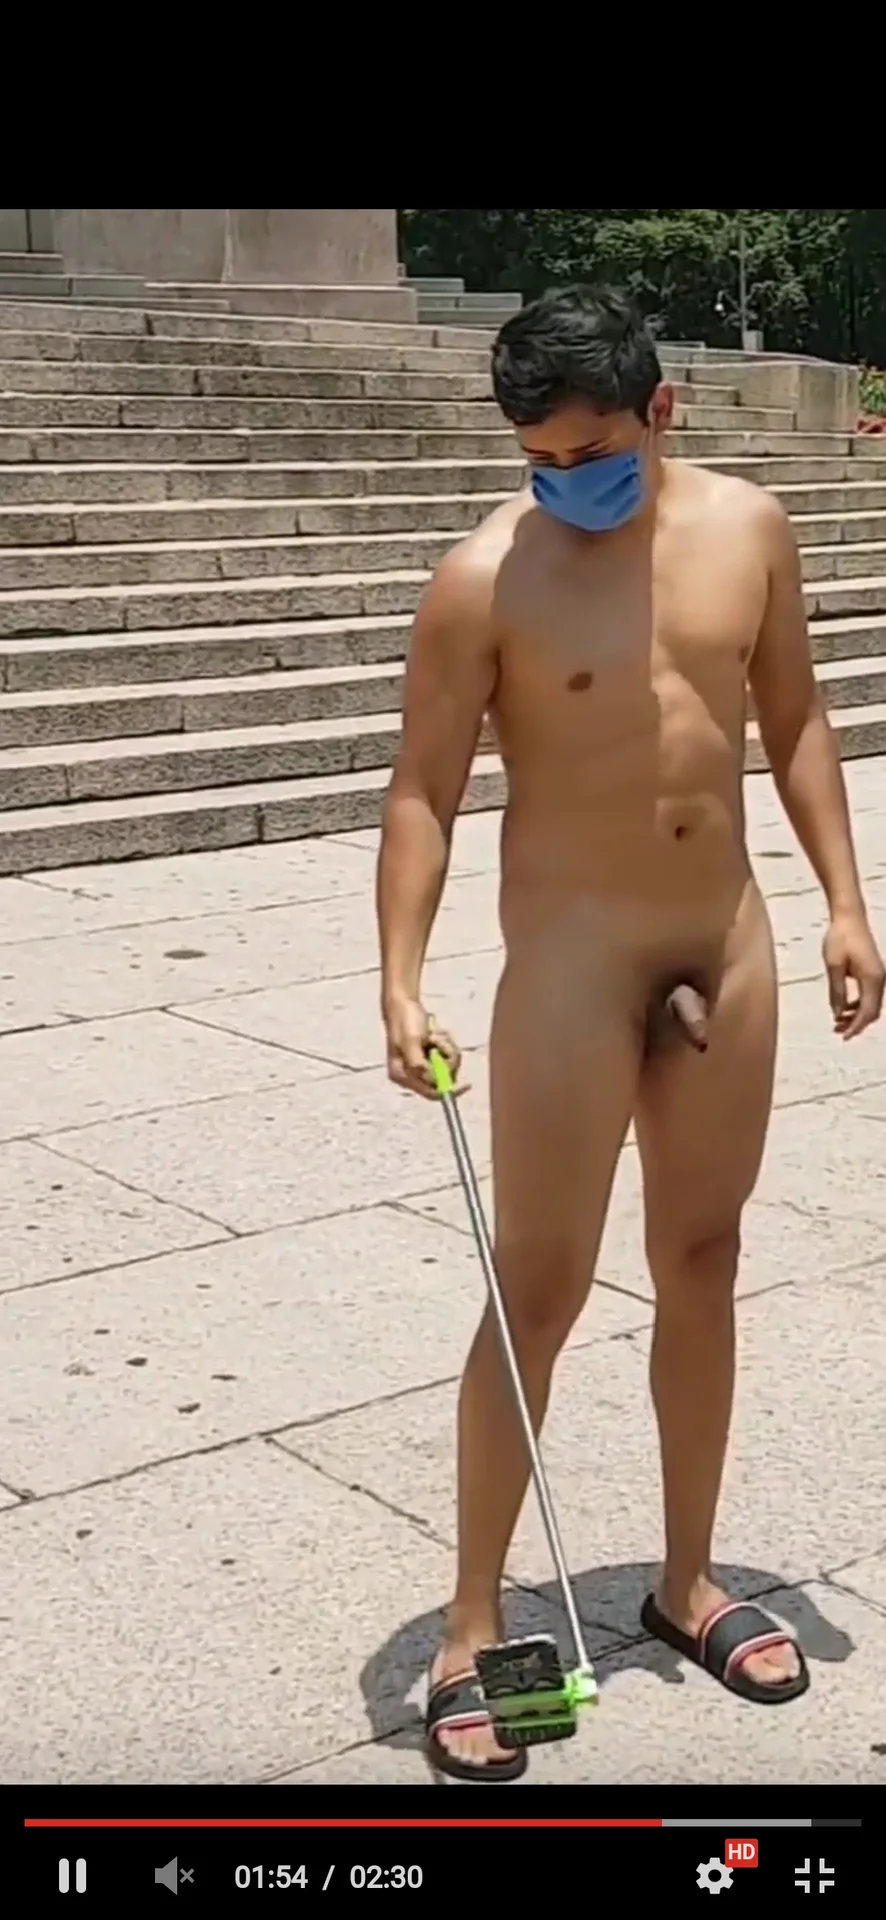 Man nude in public